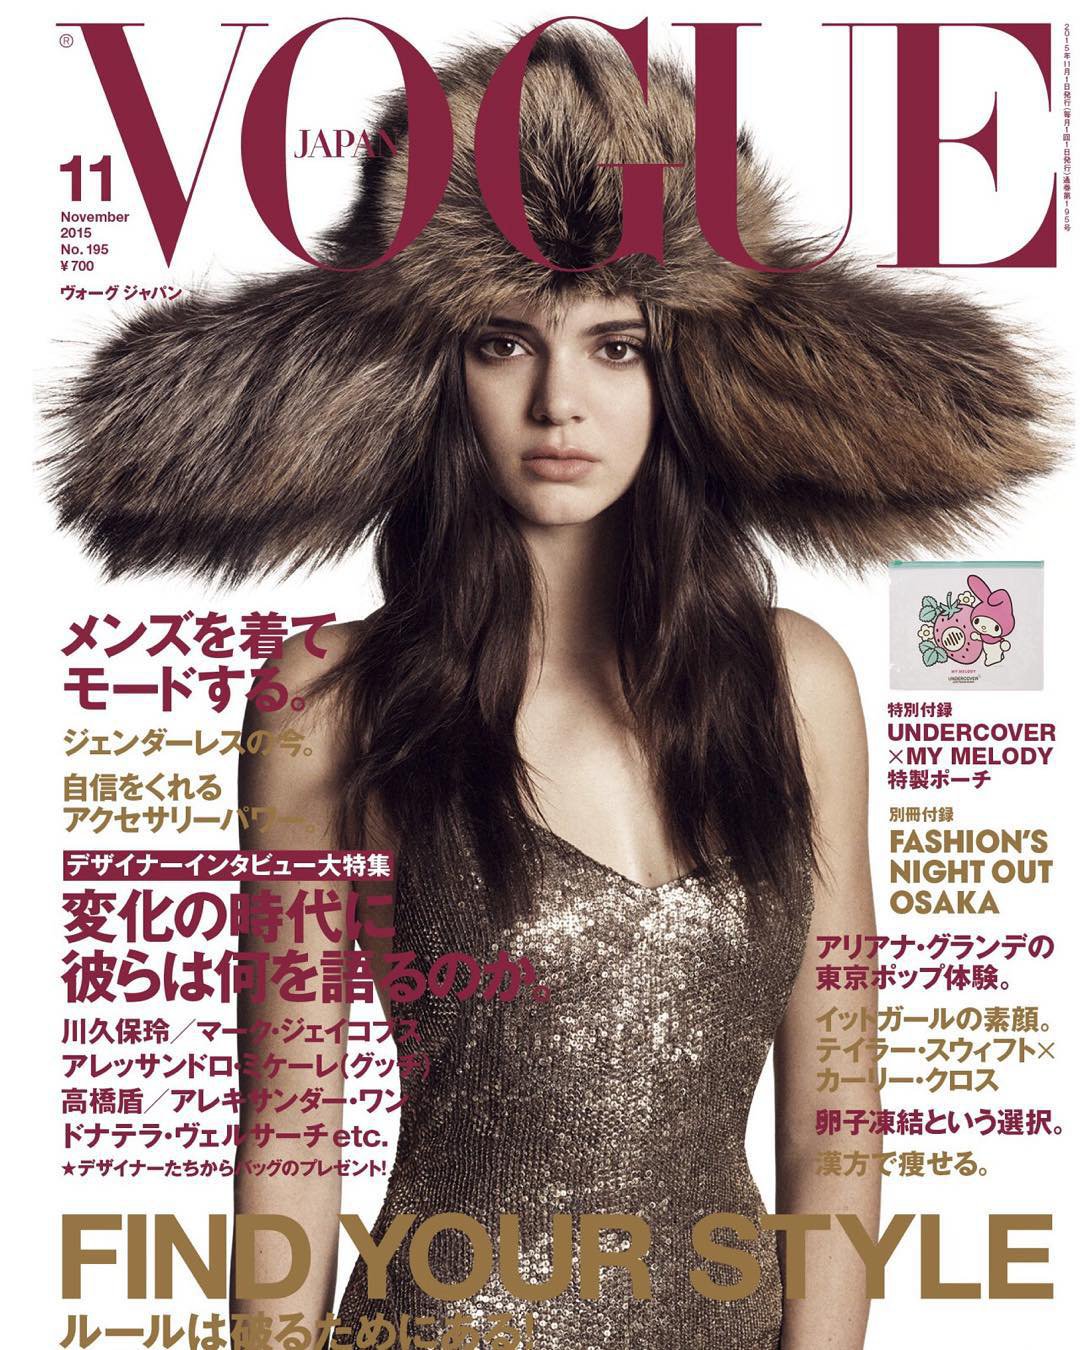 Kendall Jenner topless photo shoot for Vogue Japan magazine November 2015